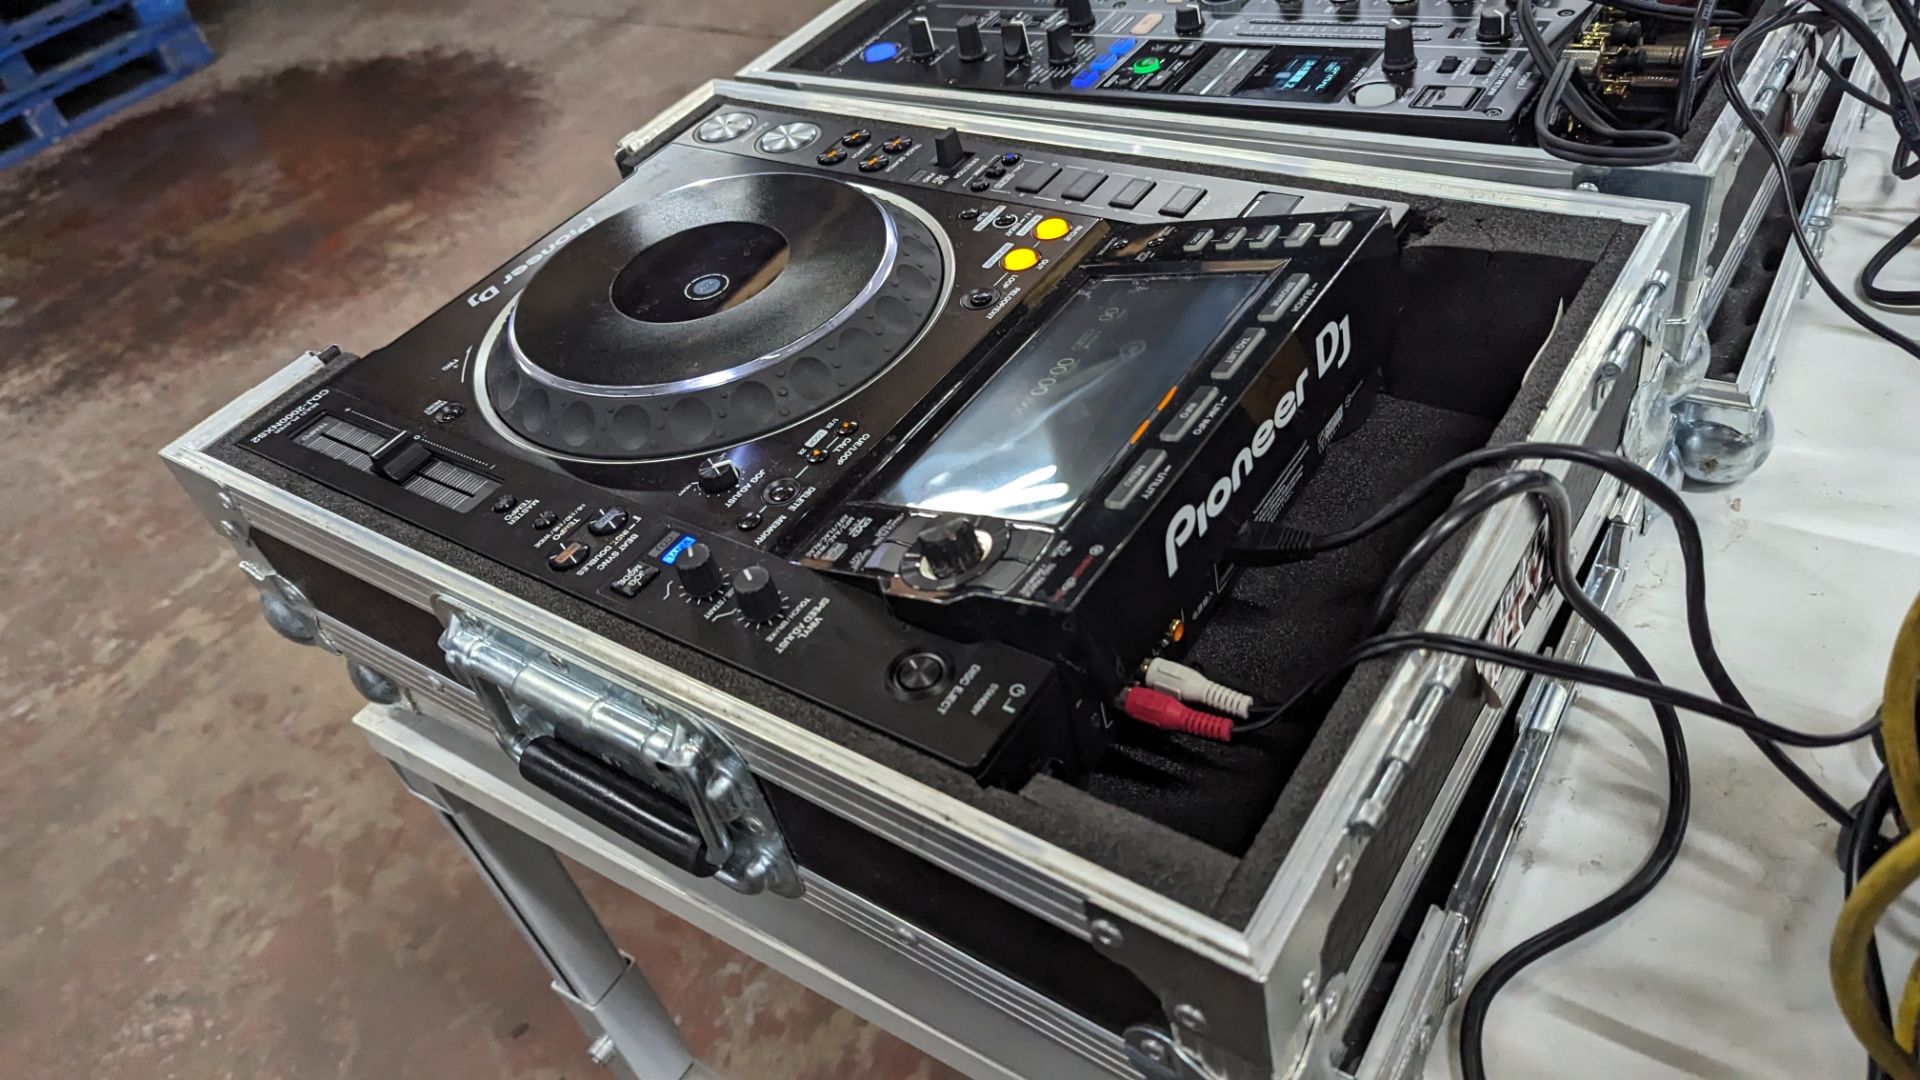 Pioneer Pro DJ package: DJM-900NXS2 Mixer & 2x DJM-900NXS2 multi players - Image 26 of 55